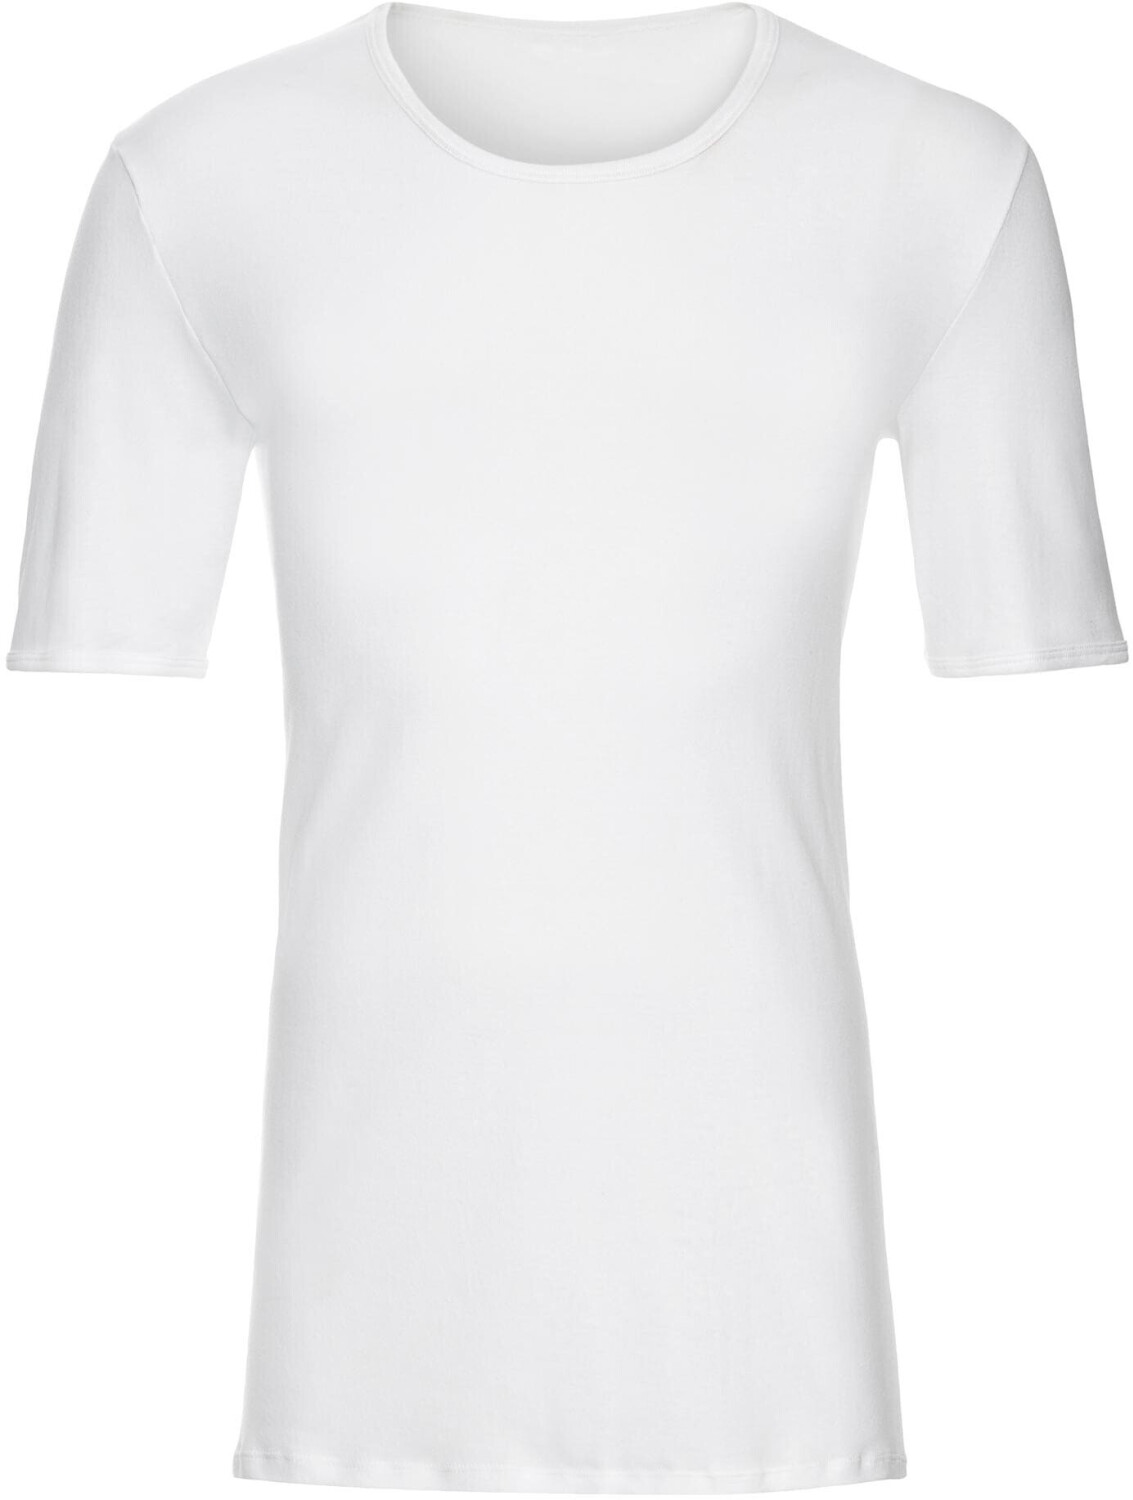 Schiesser Shirt 1/2 Arm Classic Feinripp weiß (005122-100) ab 16